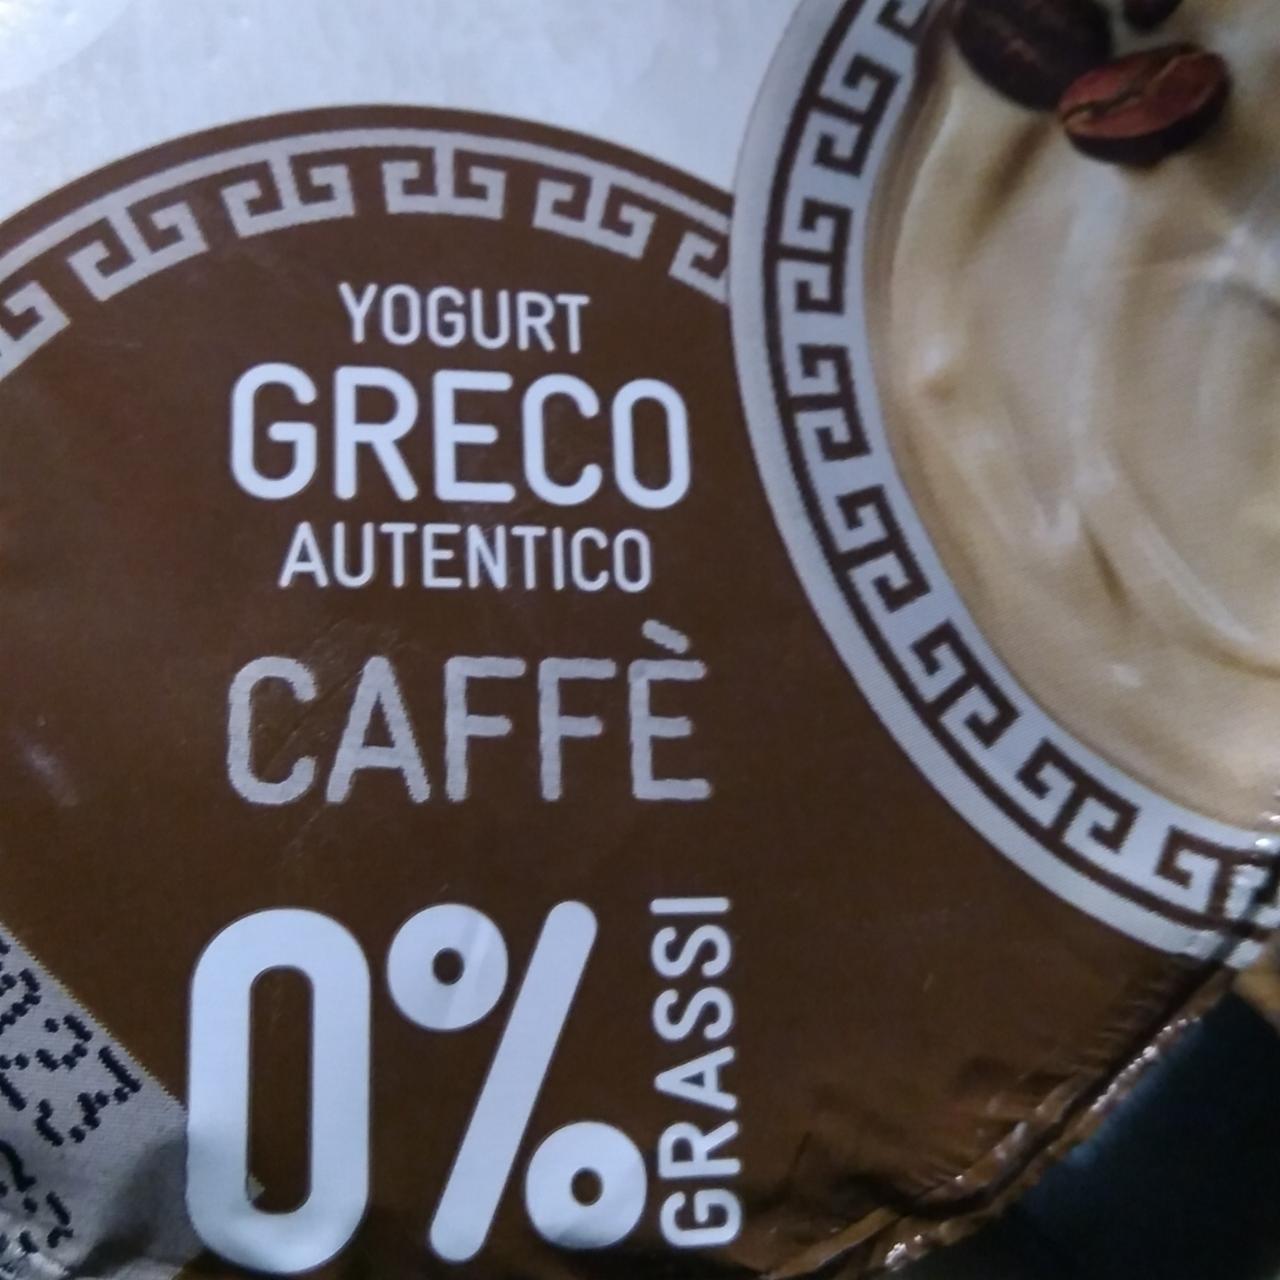 Fotografie - Yogurt greco 0% grassi Caffé Conad